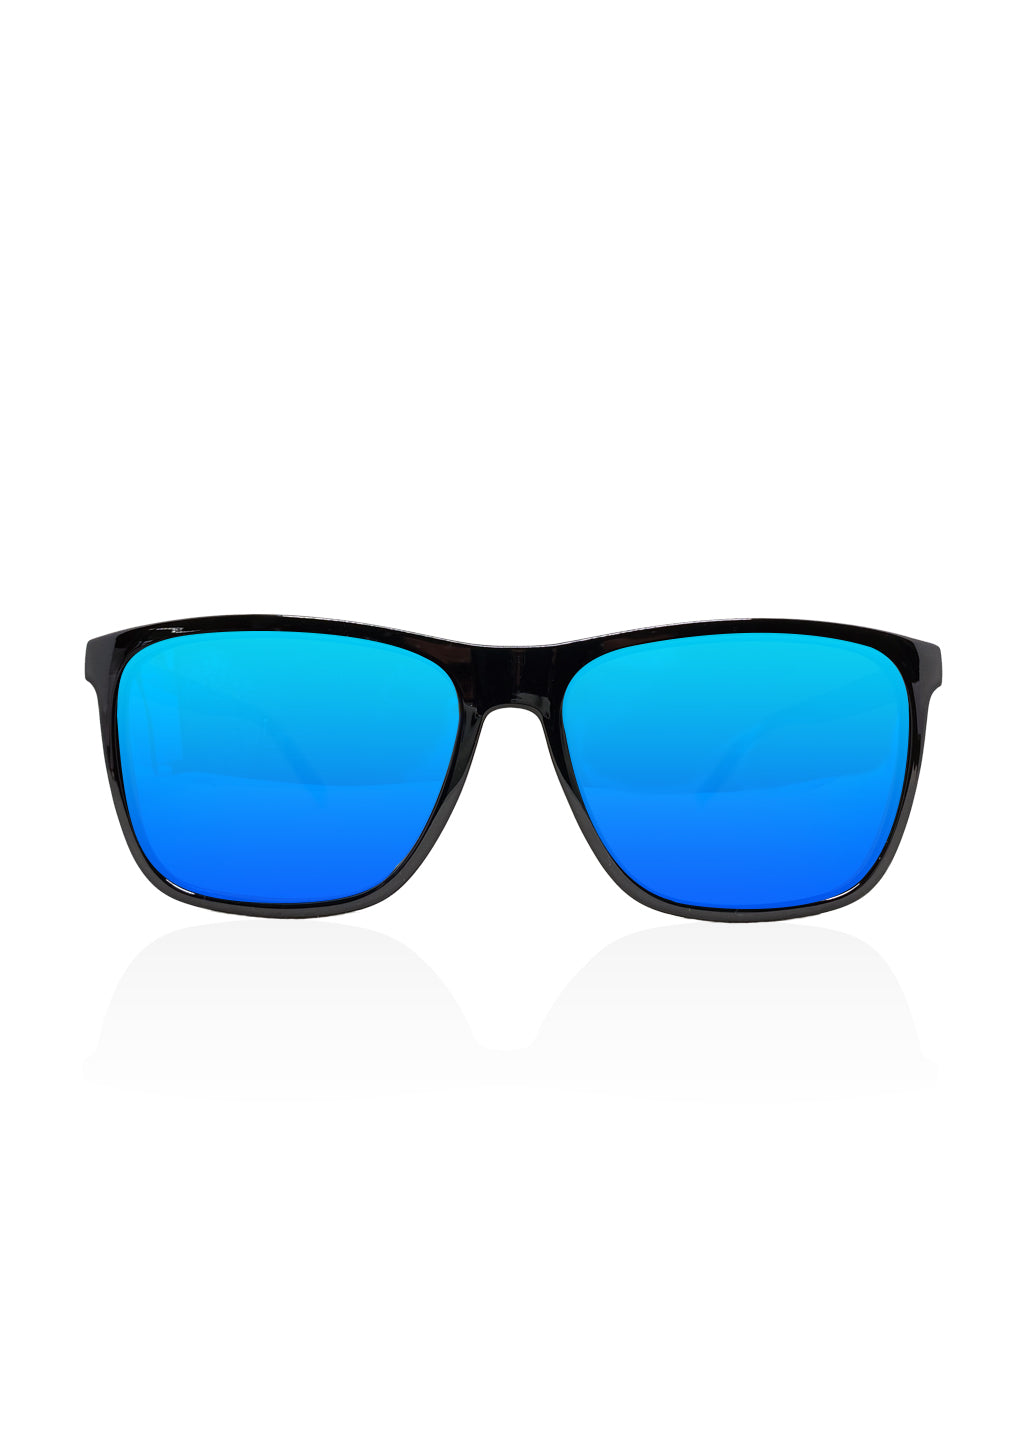 Noord Wayfarer sunglasses - Front